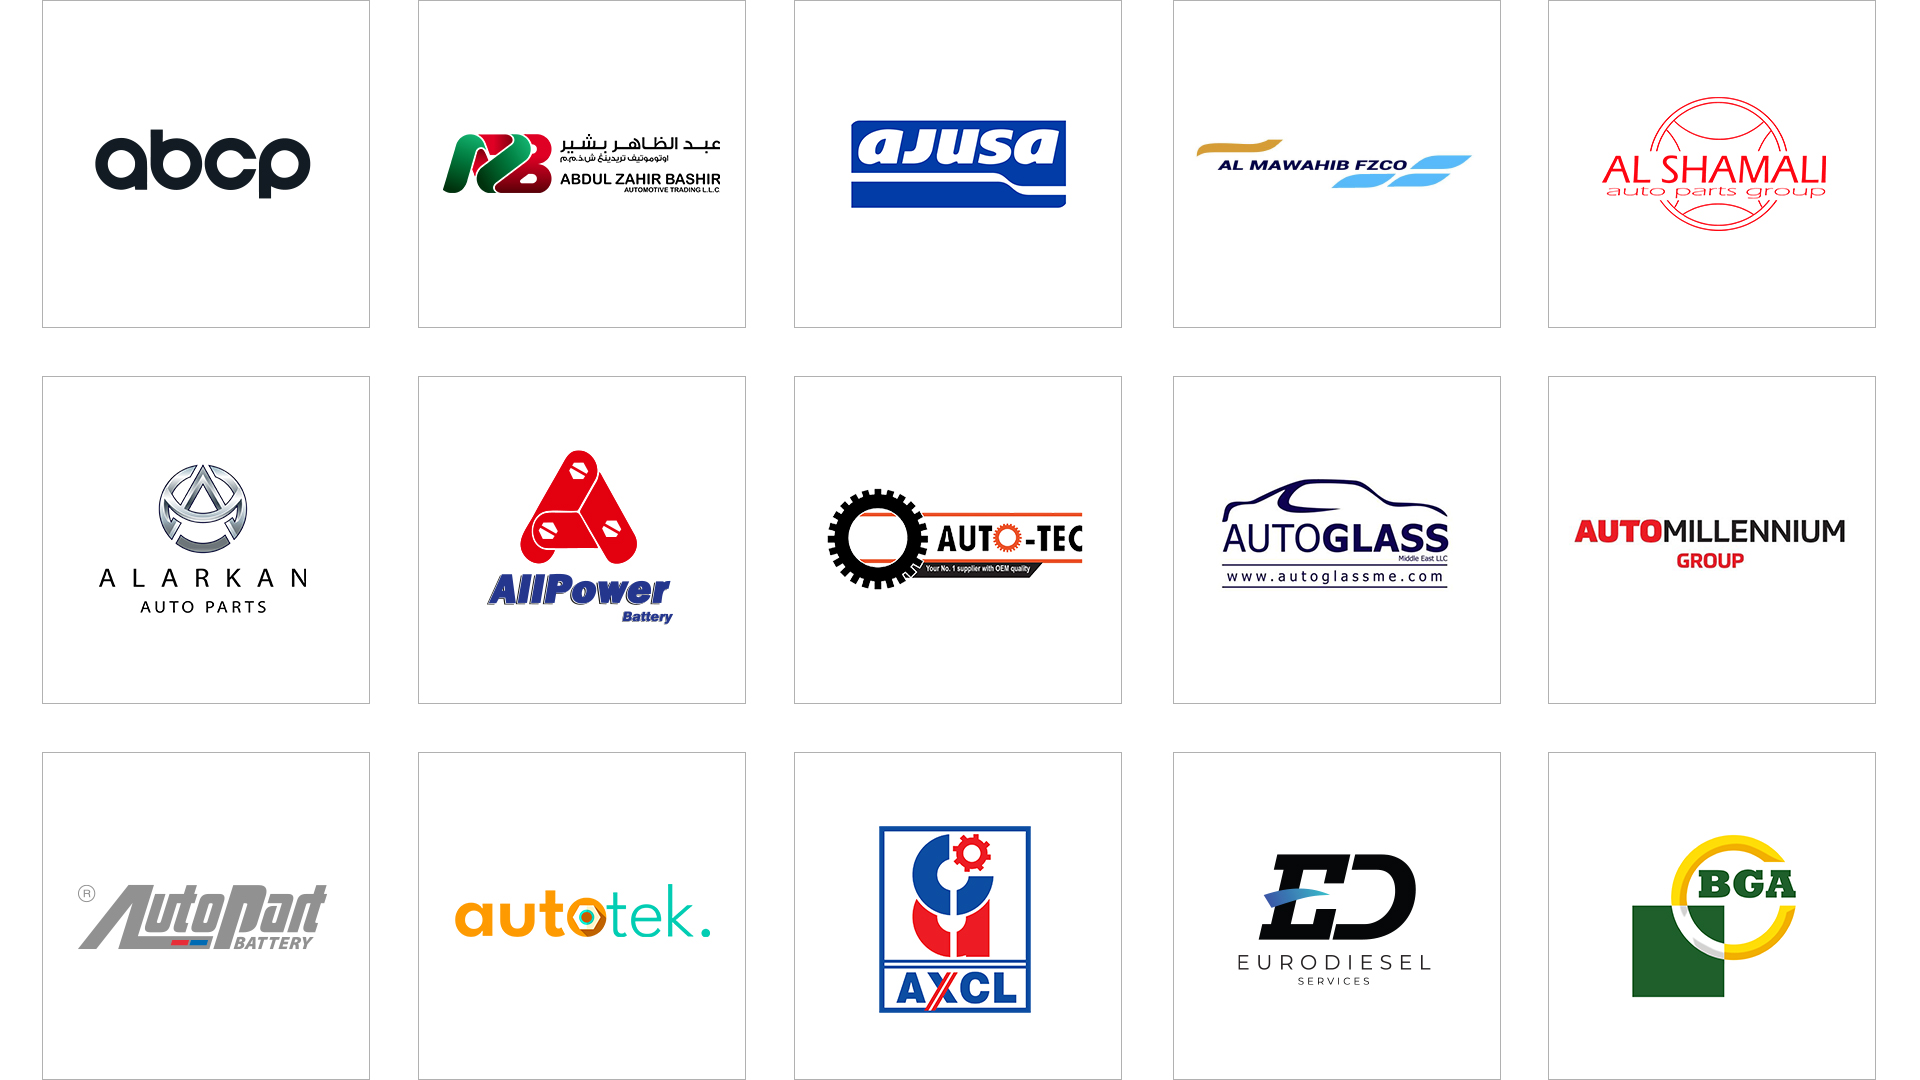 Automechanika Dubai - 2021 Featured exhibitors